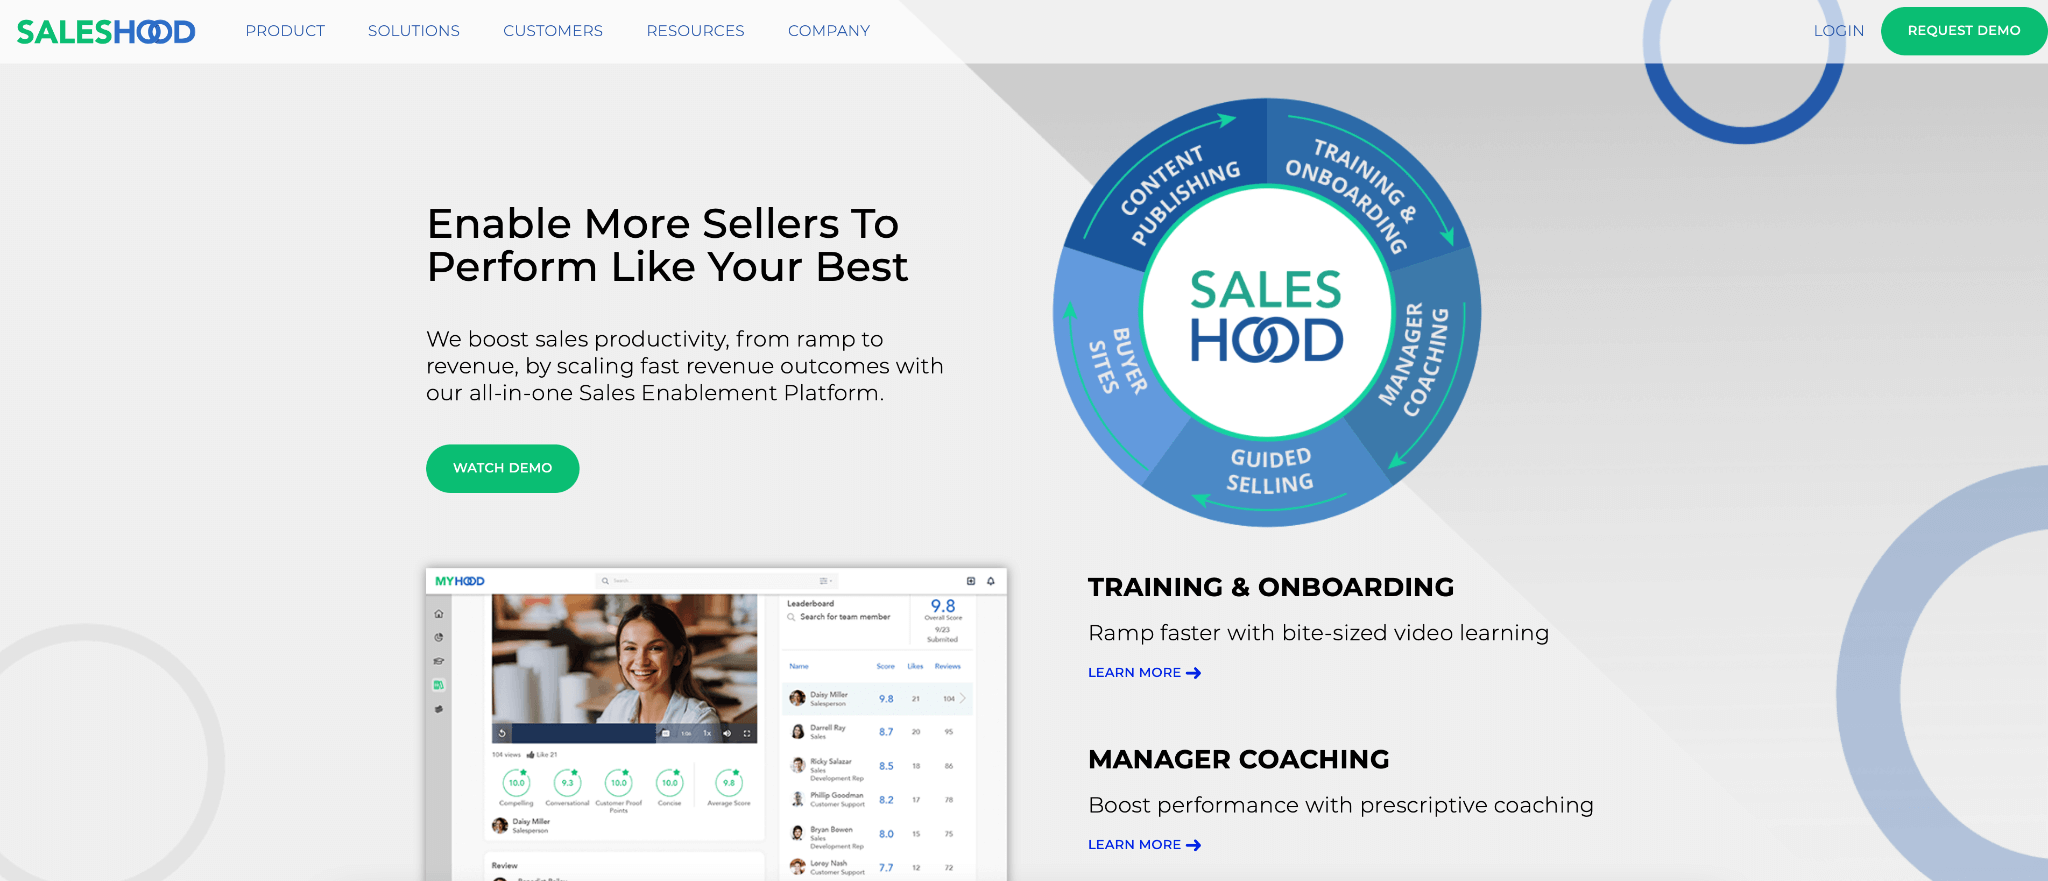 SalesHood homepage: Enable More Sellers to Perform Like Your Best